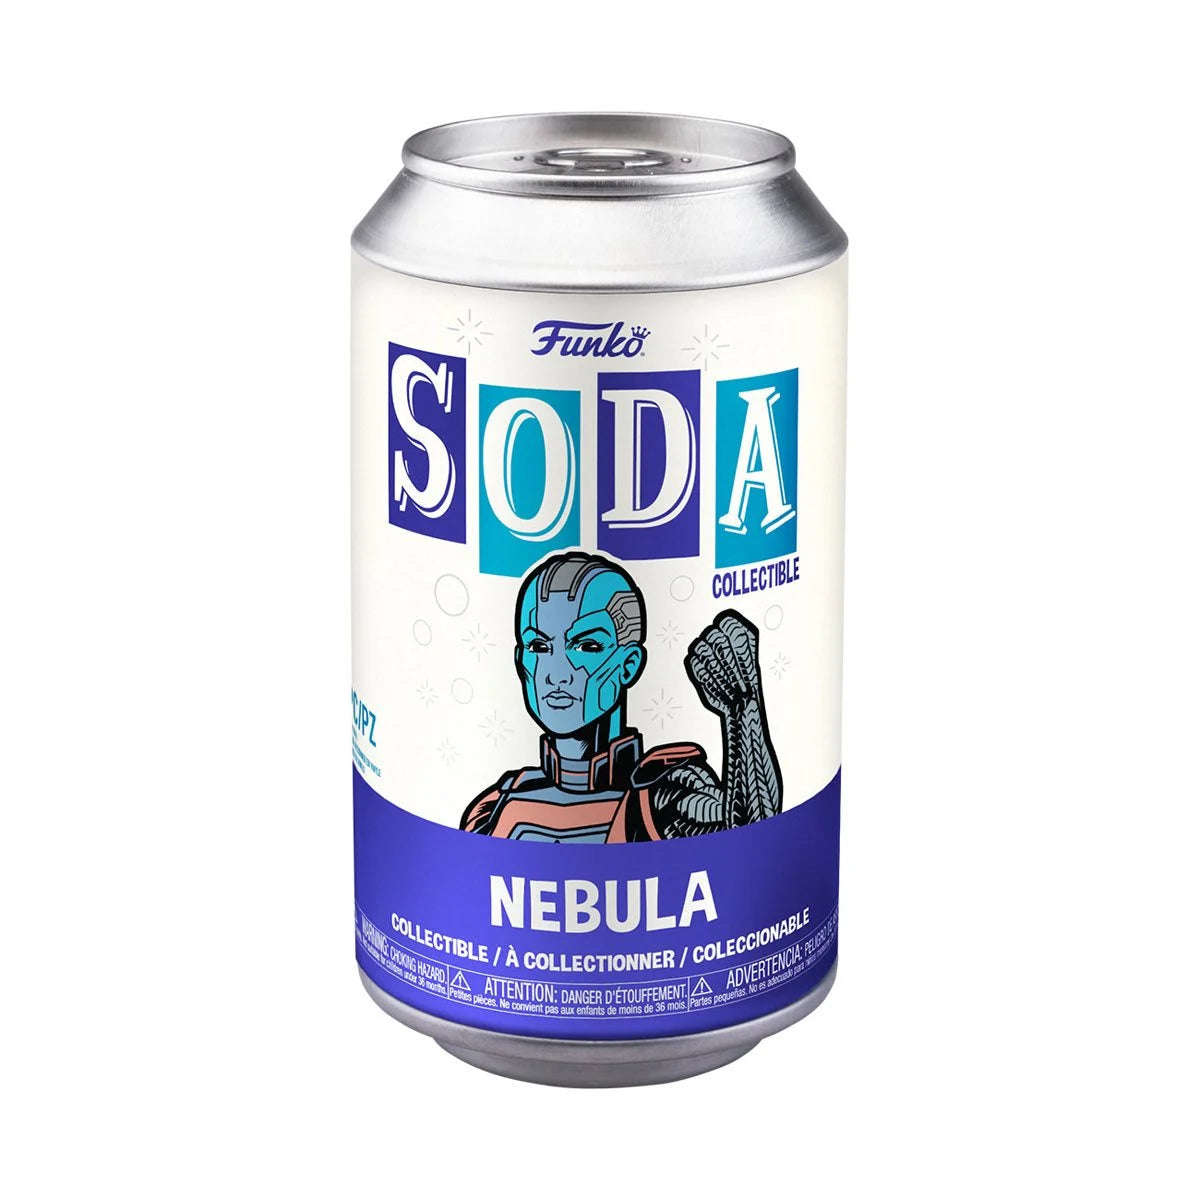 Nebula Guardians of the Galaxy Volume 3 Funko Vinyl Soda w/ Chance of chase!